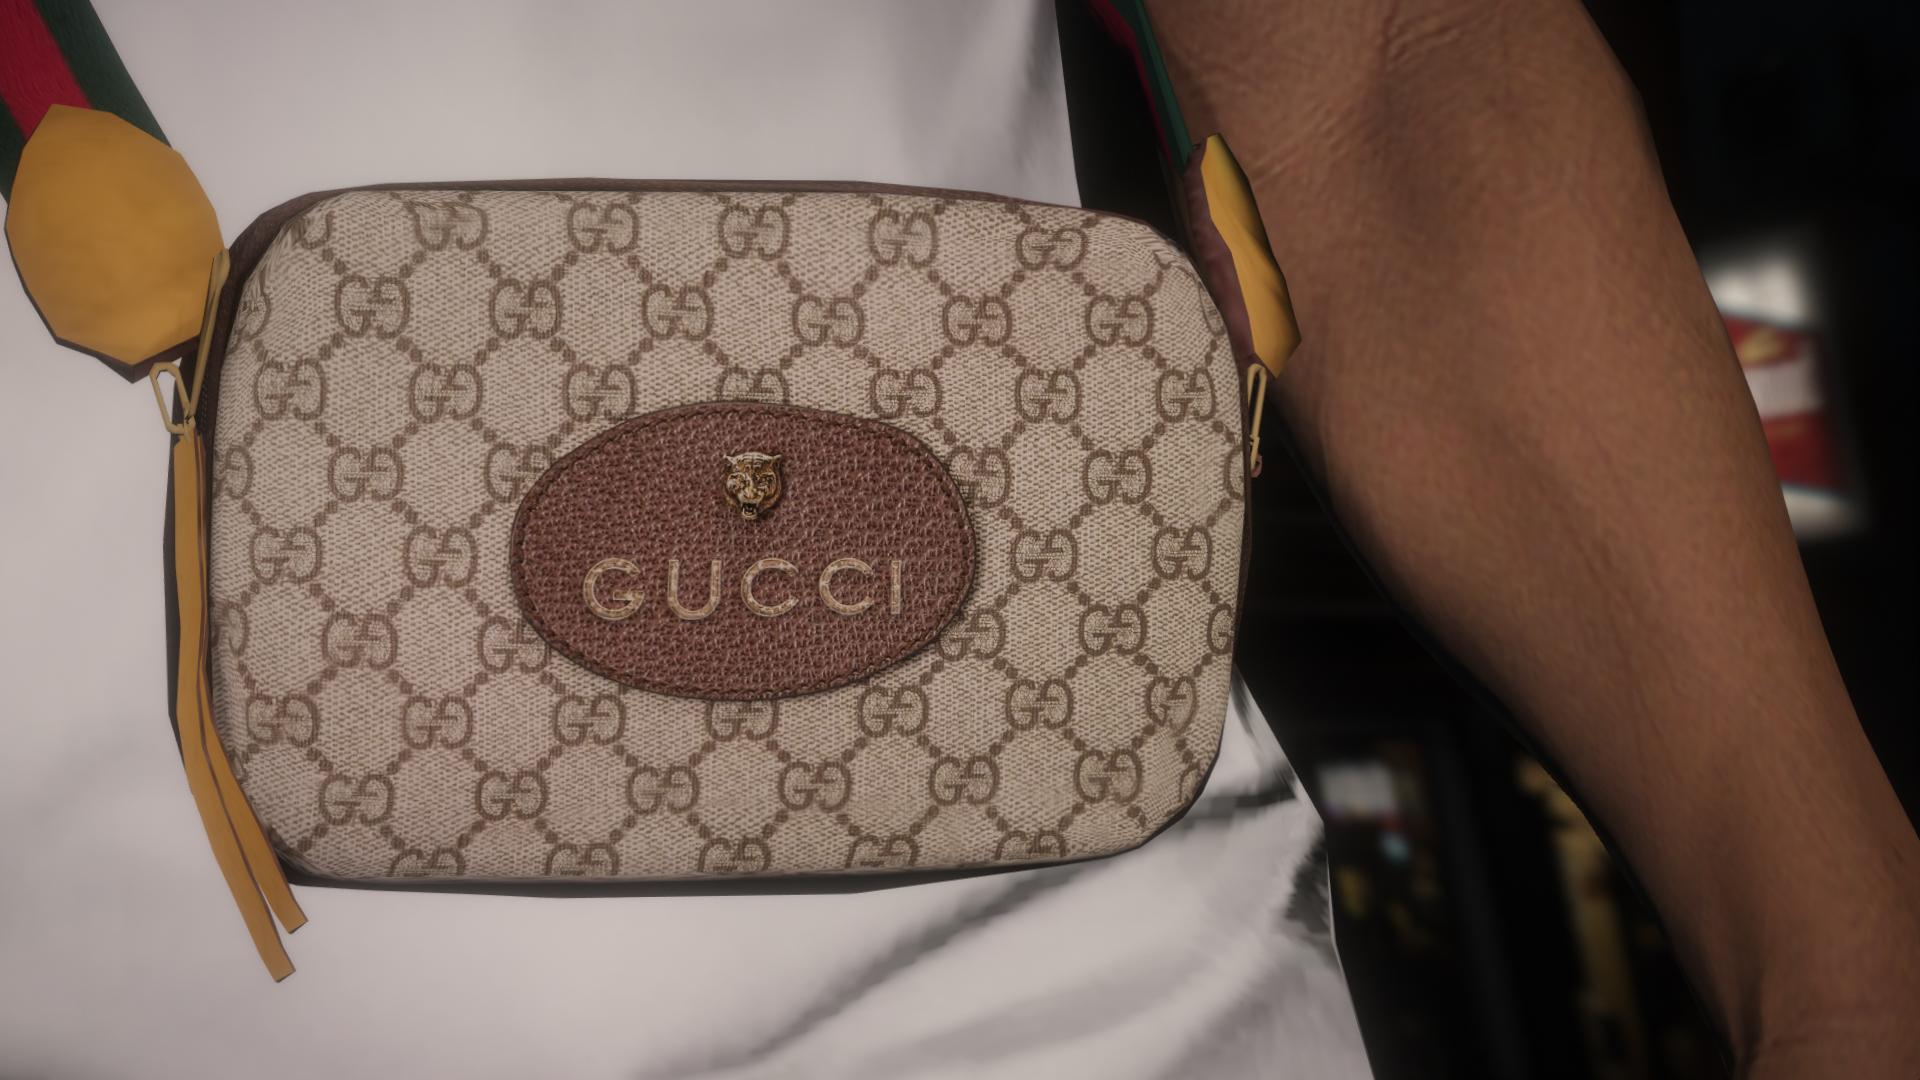 GG Supreme crossbody bag, Gucci